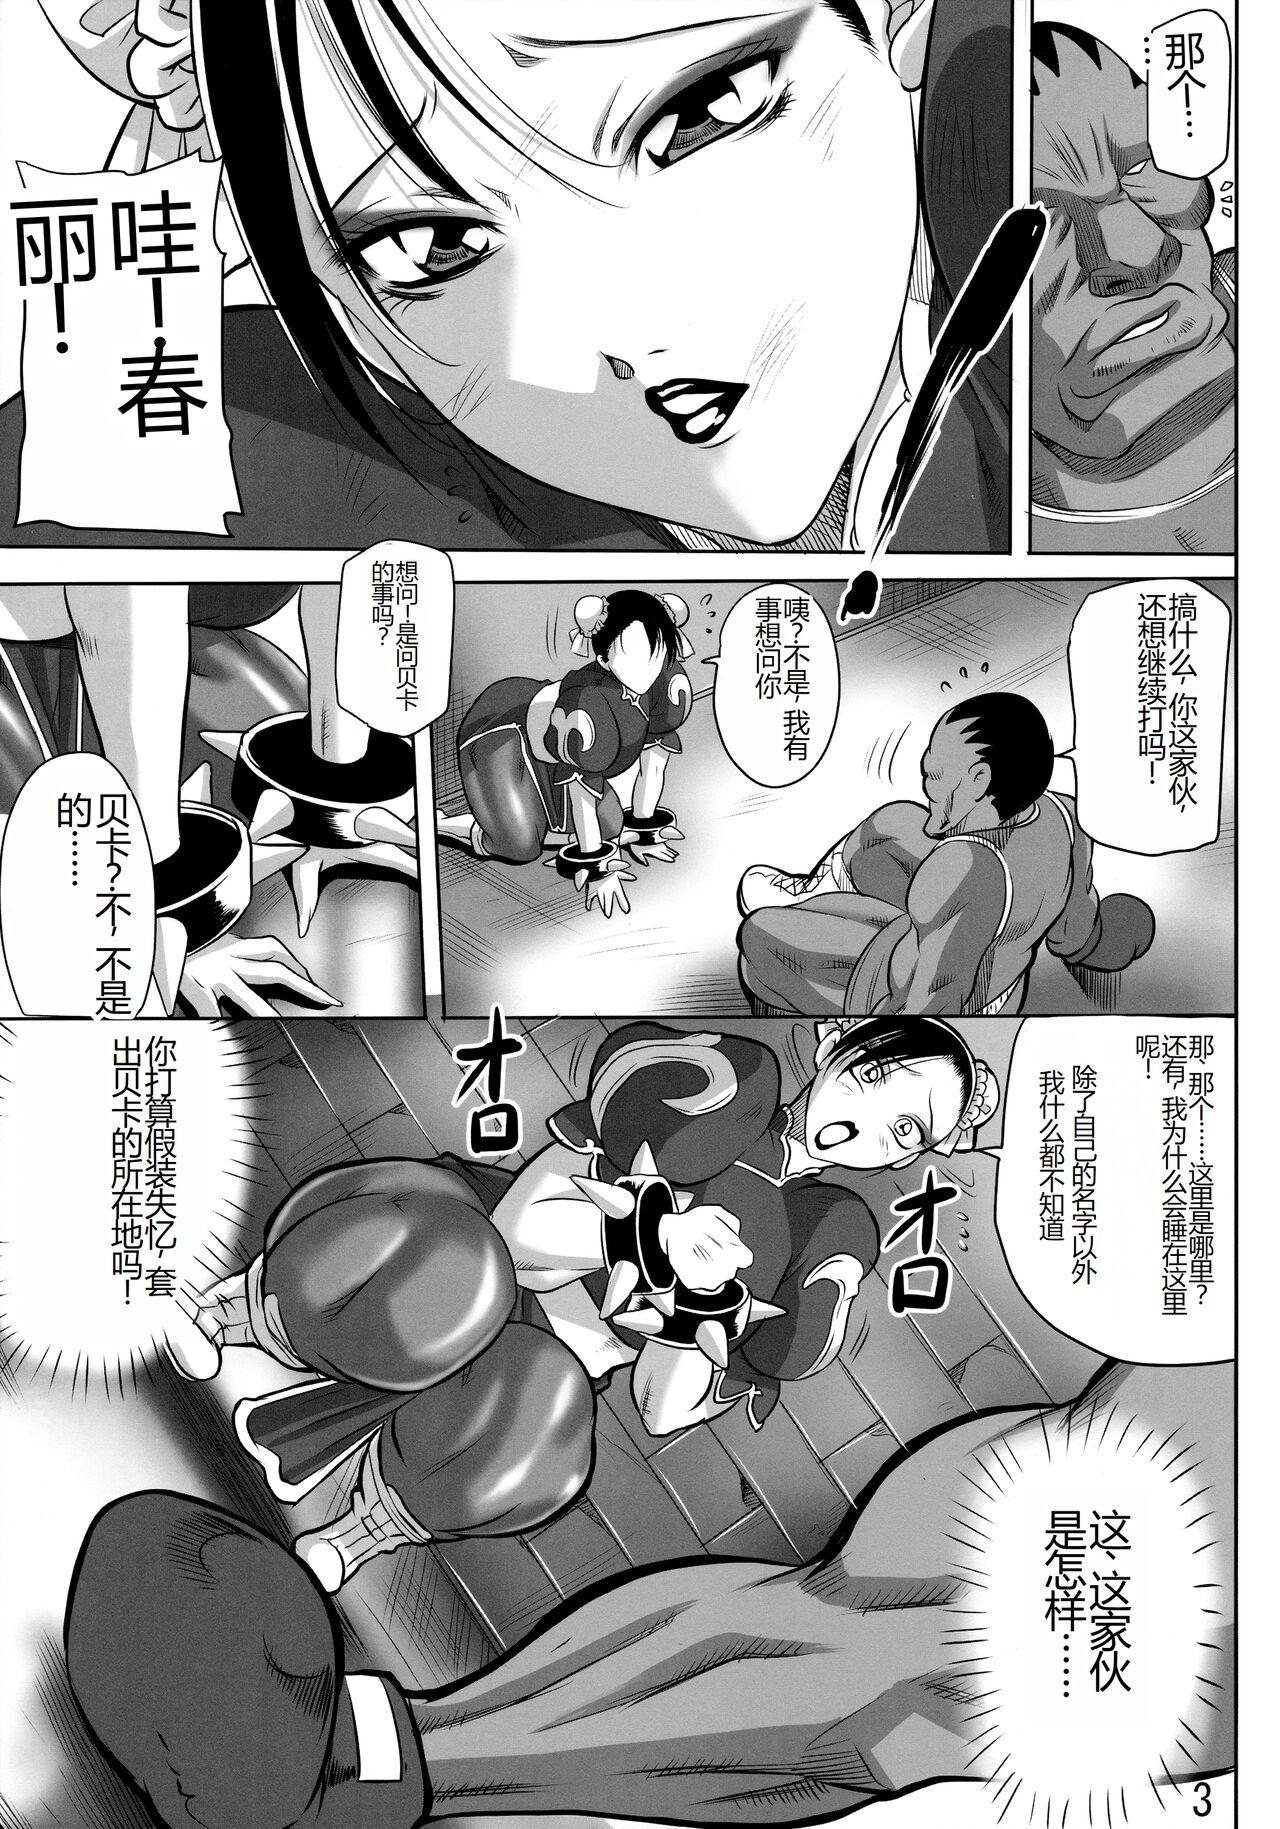 Cutie CALL GIRL CHUN-LI - Street fighter Milf Cougar - Page 4